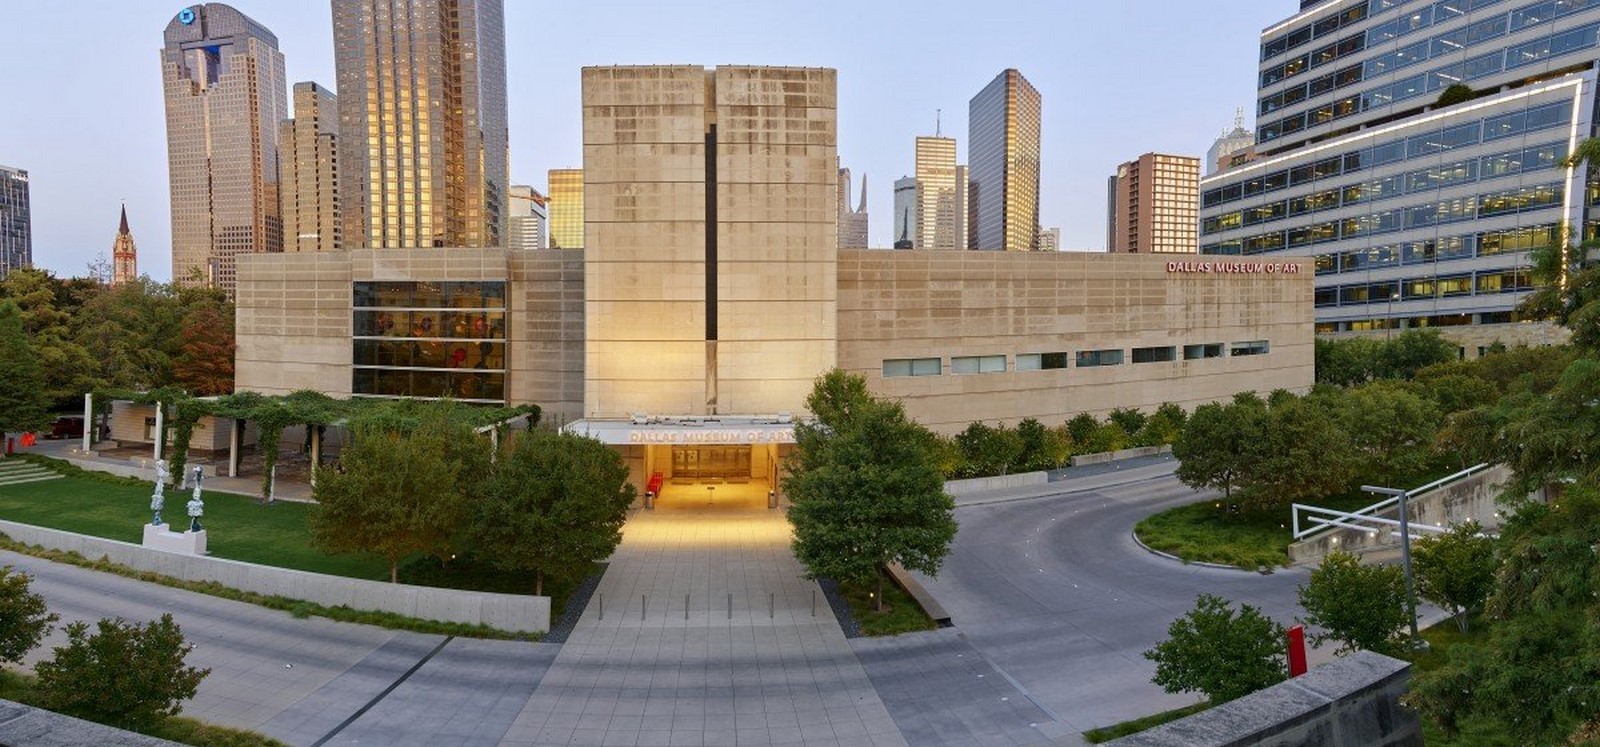 Dallas Museum of Art, Designed by: Architect Edward Larrabee Barnes - Sheet1